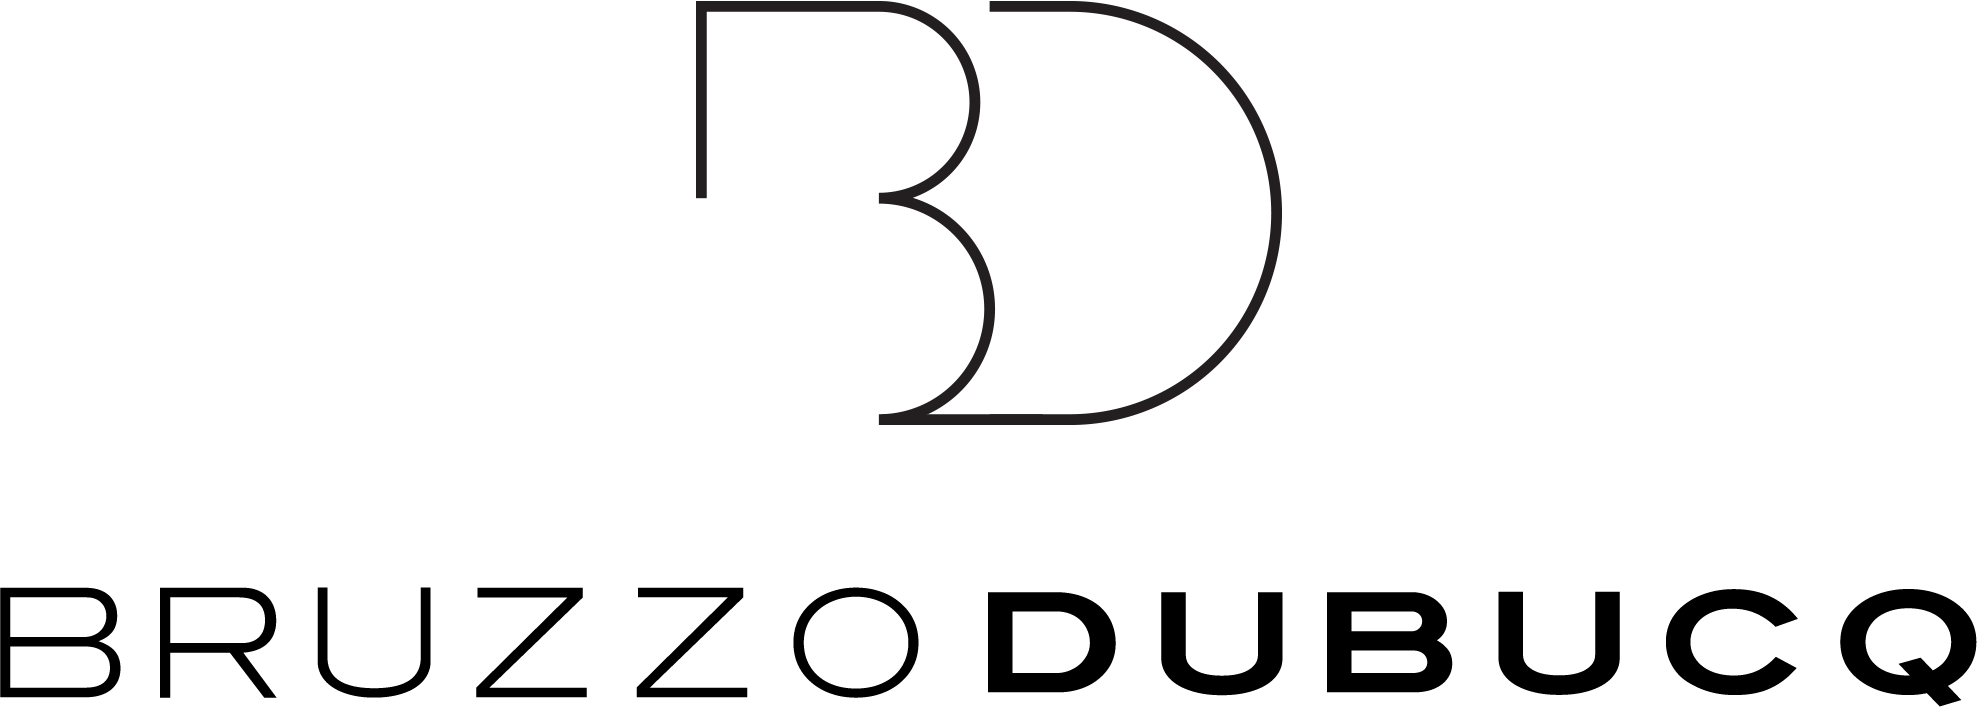 Bruzzo Dubucq Lawyers